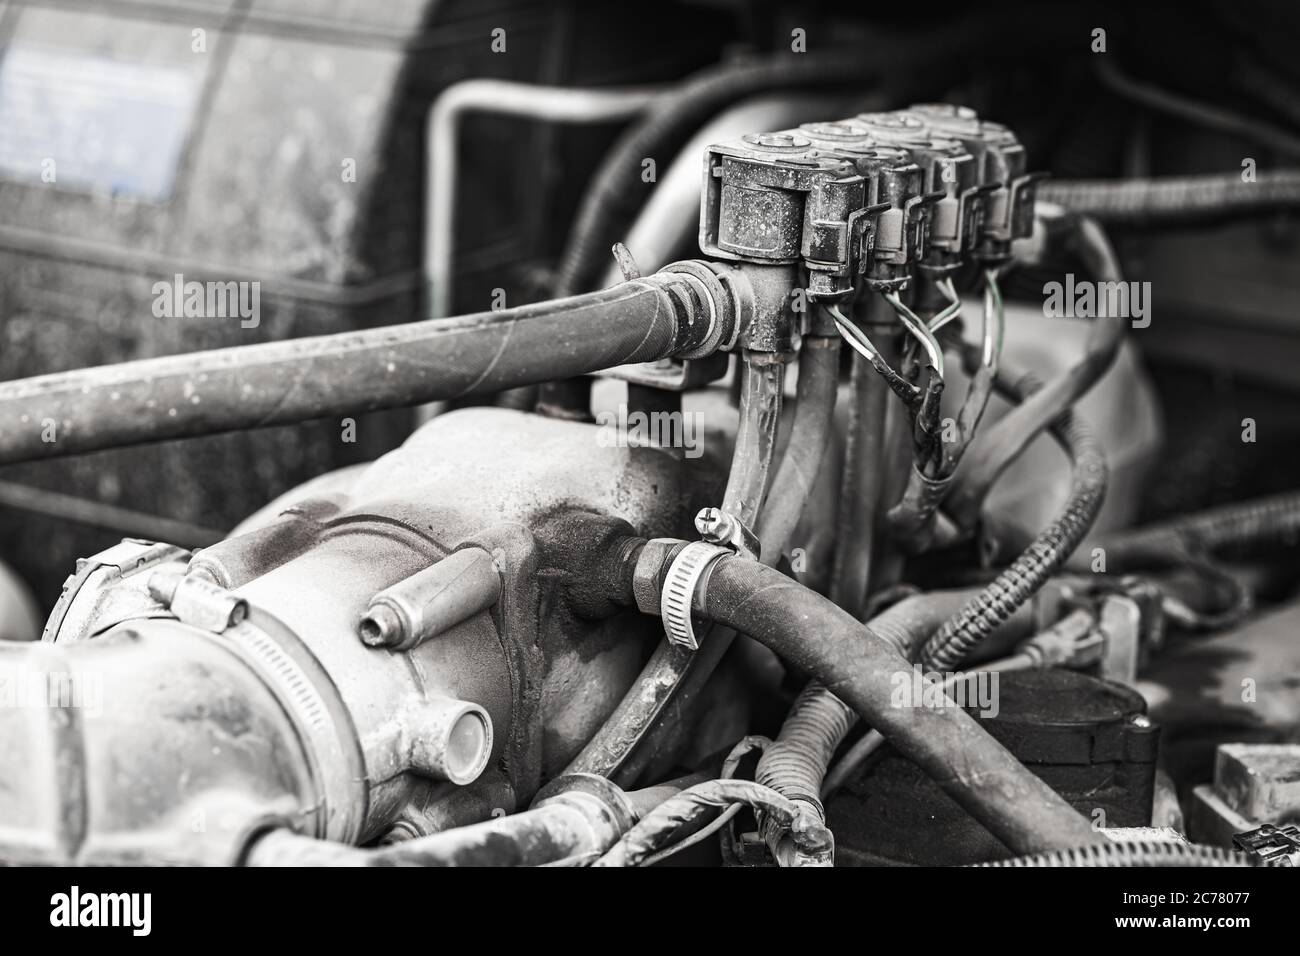 Gas-Kraftstoff-System, Motor Teile eines SUV Hybrid-Auto, Gas Düsen Nahaufnahme Foto mit selektiven weichen Fokus Stockfoto